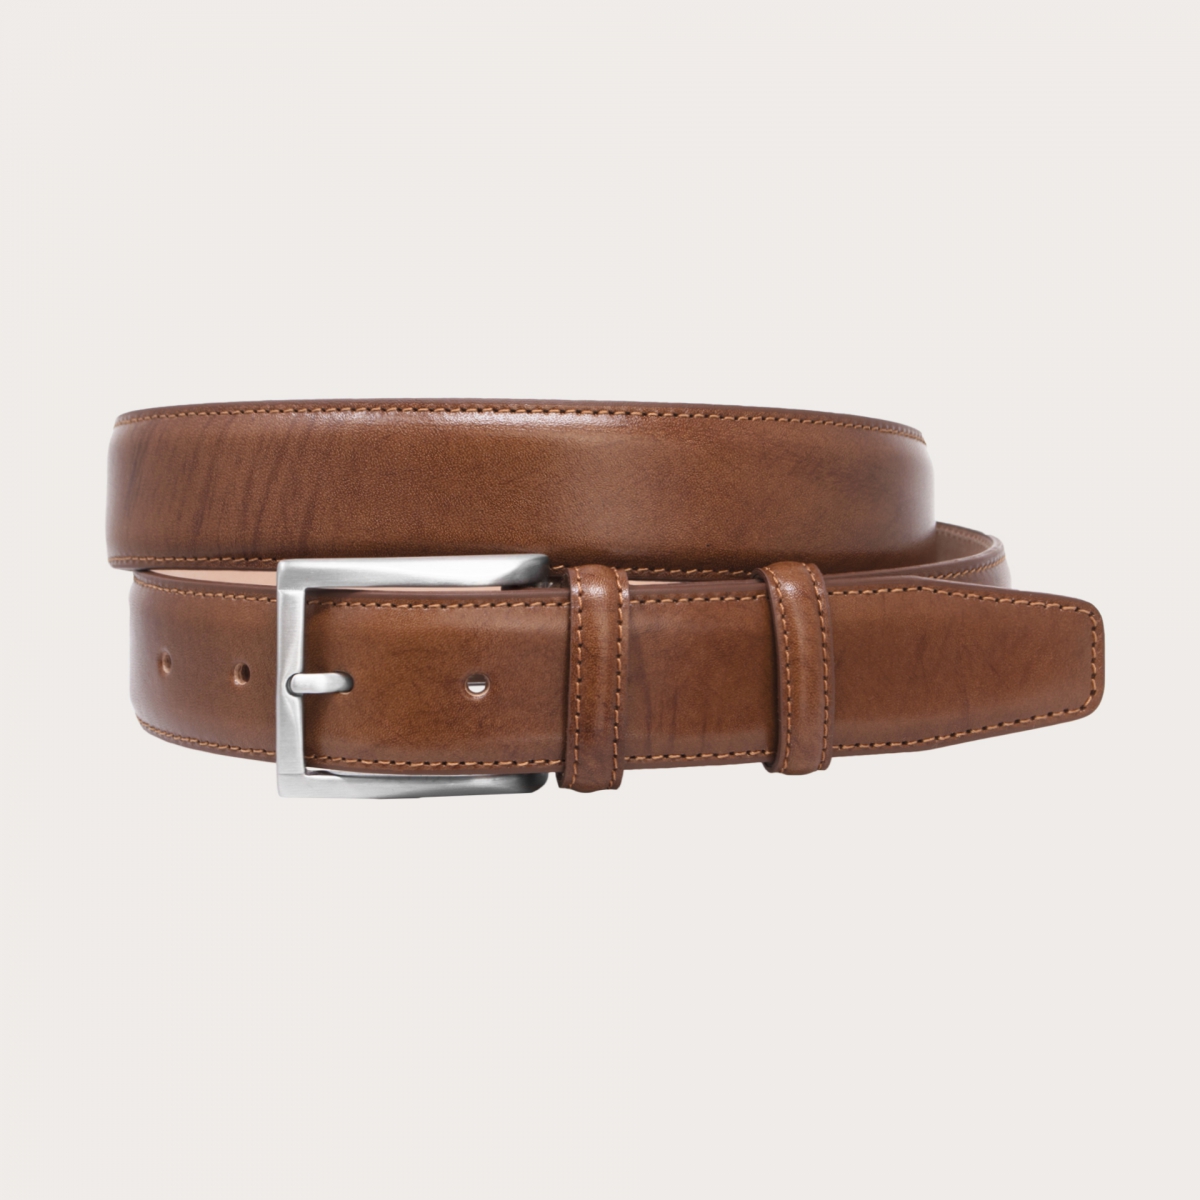 Refined belt in vegetal tanned leather, brown cognac